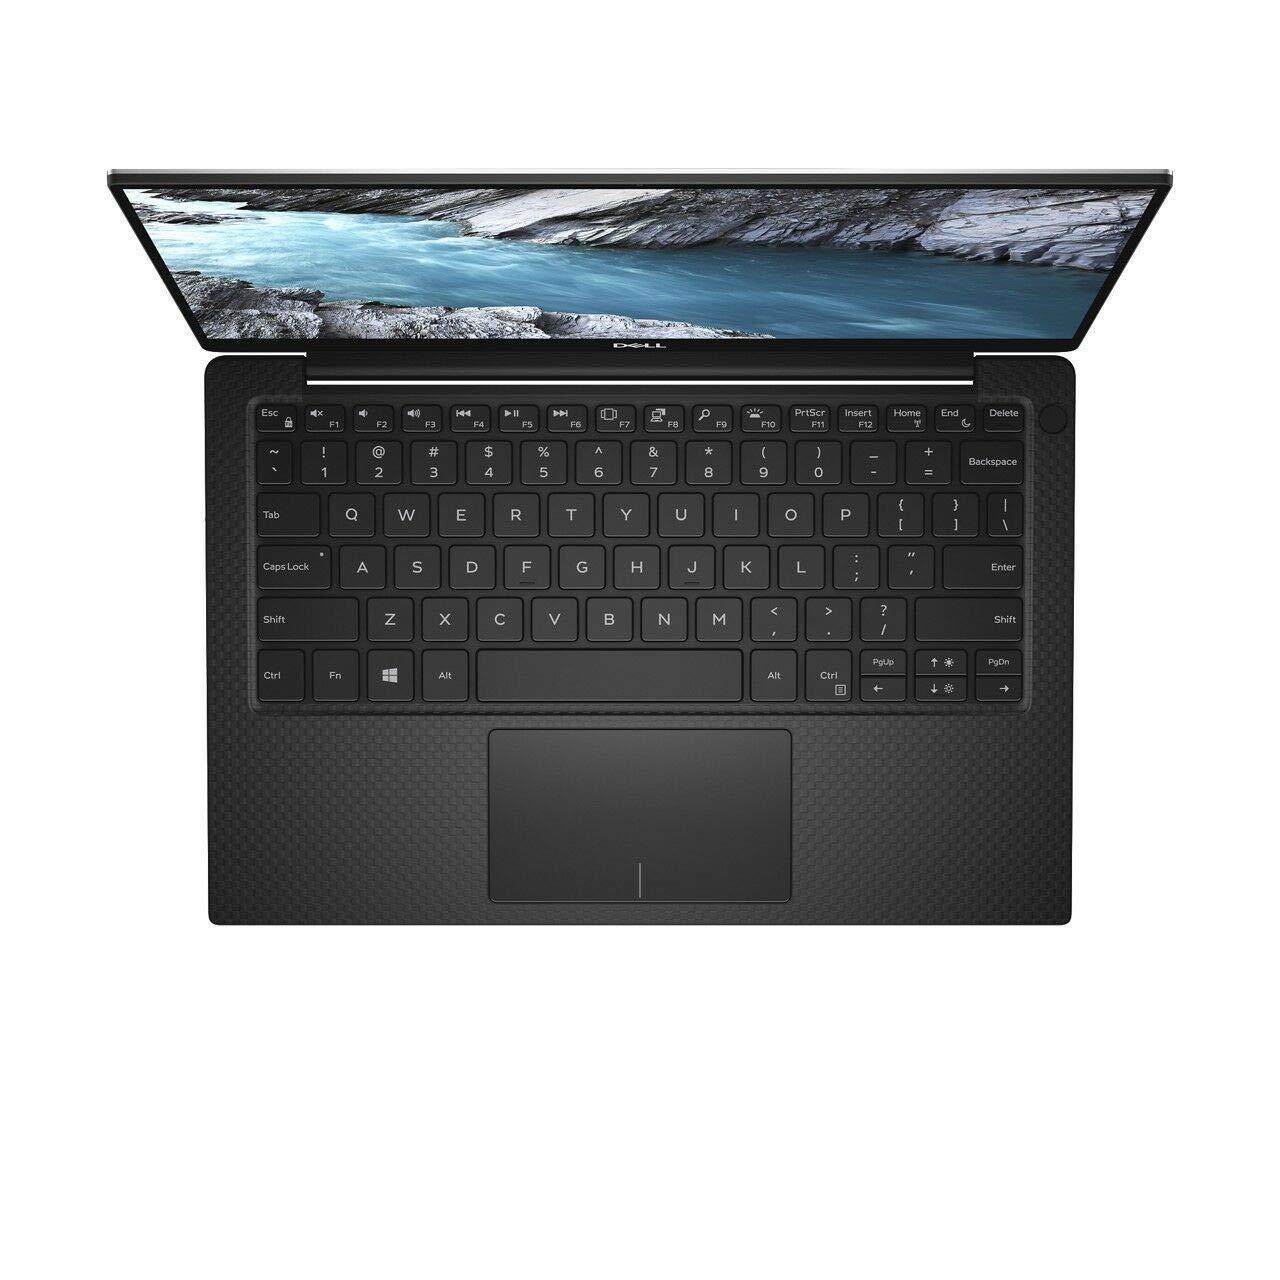 Dell 2019 XPS 13 9380 Laptop, 13.3-inch 4K UHD 3840x2160 Touch Screen, Intel Core i7-8565U, 16GB Ram, 512GB SSD, Webcam On Top, FP Reader, Windows 10 pro (Renewed)